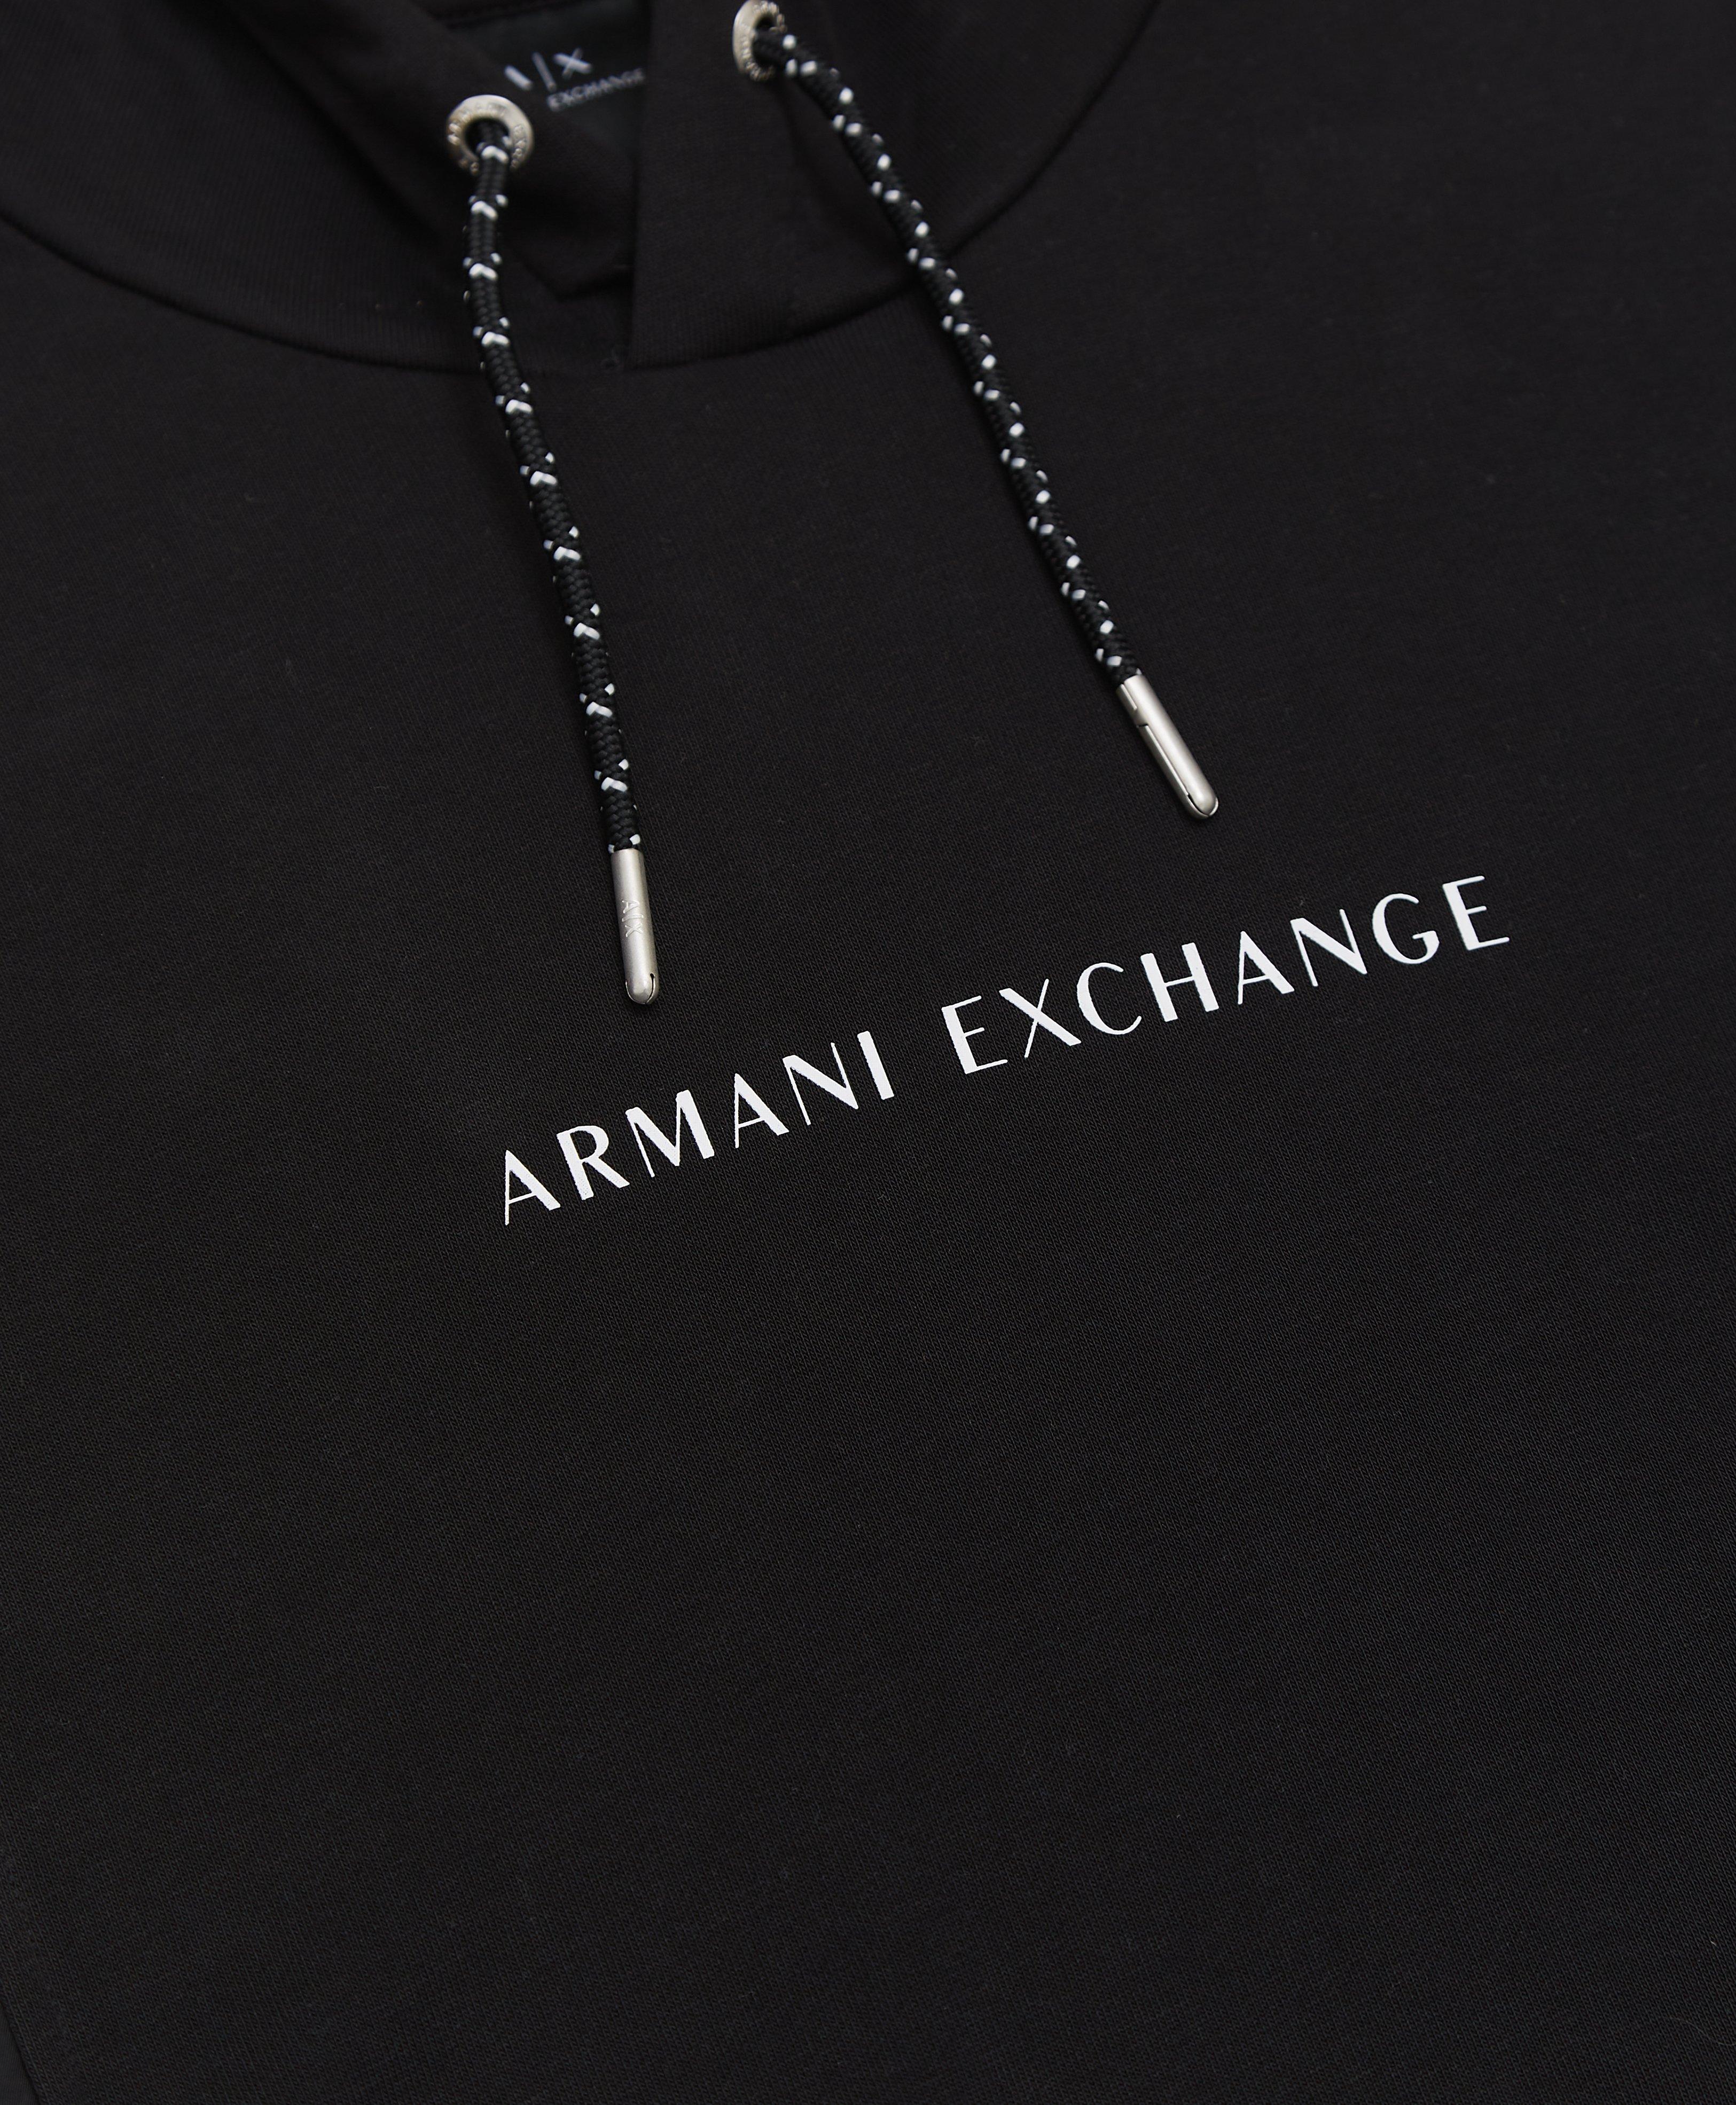 armani exchange student discount